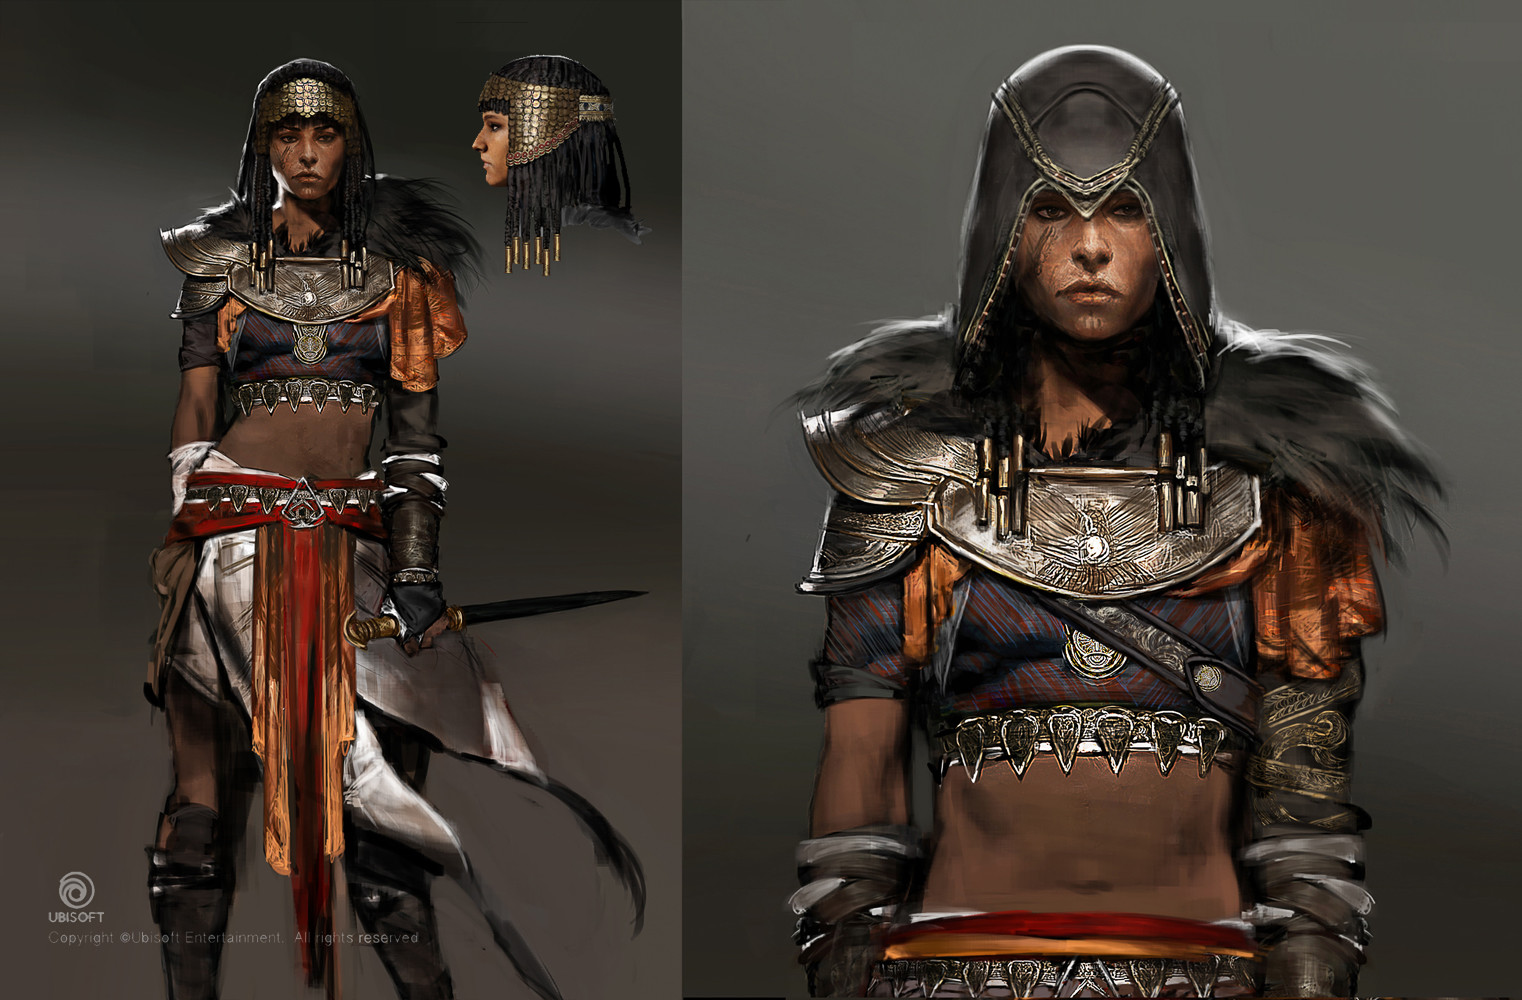 Assassin's Creed: Origins The Hidden Ones DLC outfits - Bayek and Aya.